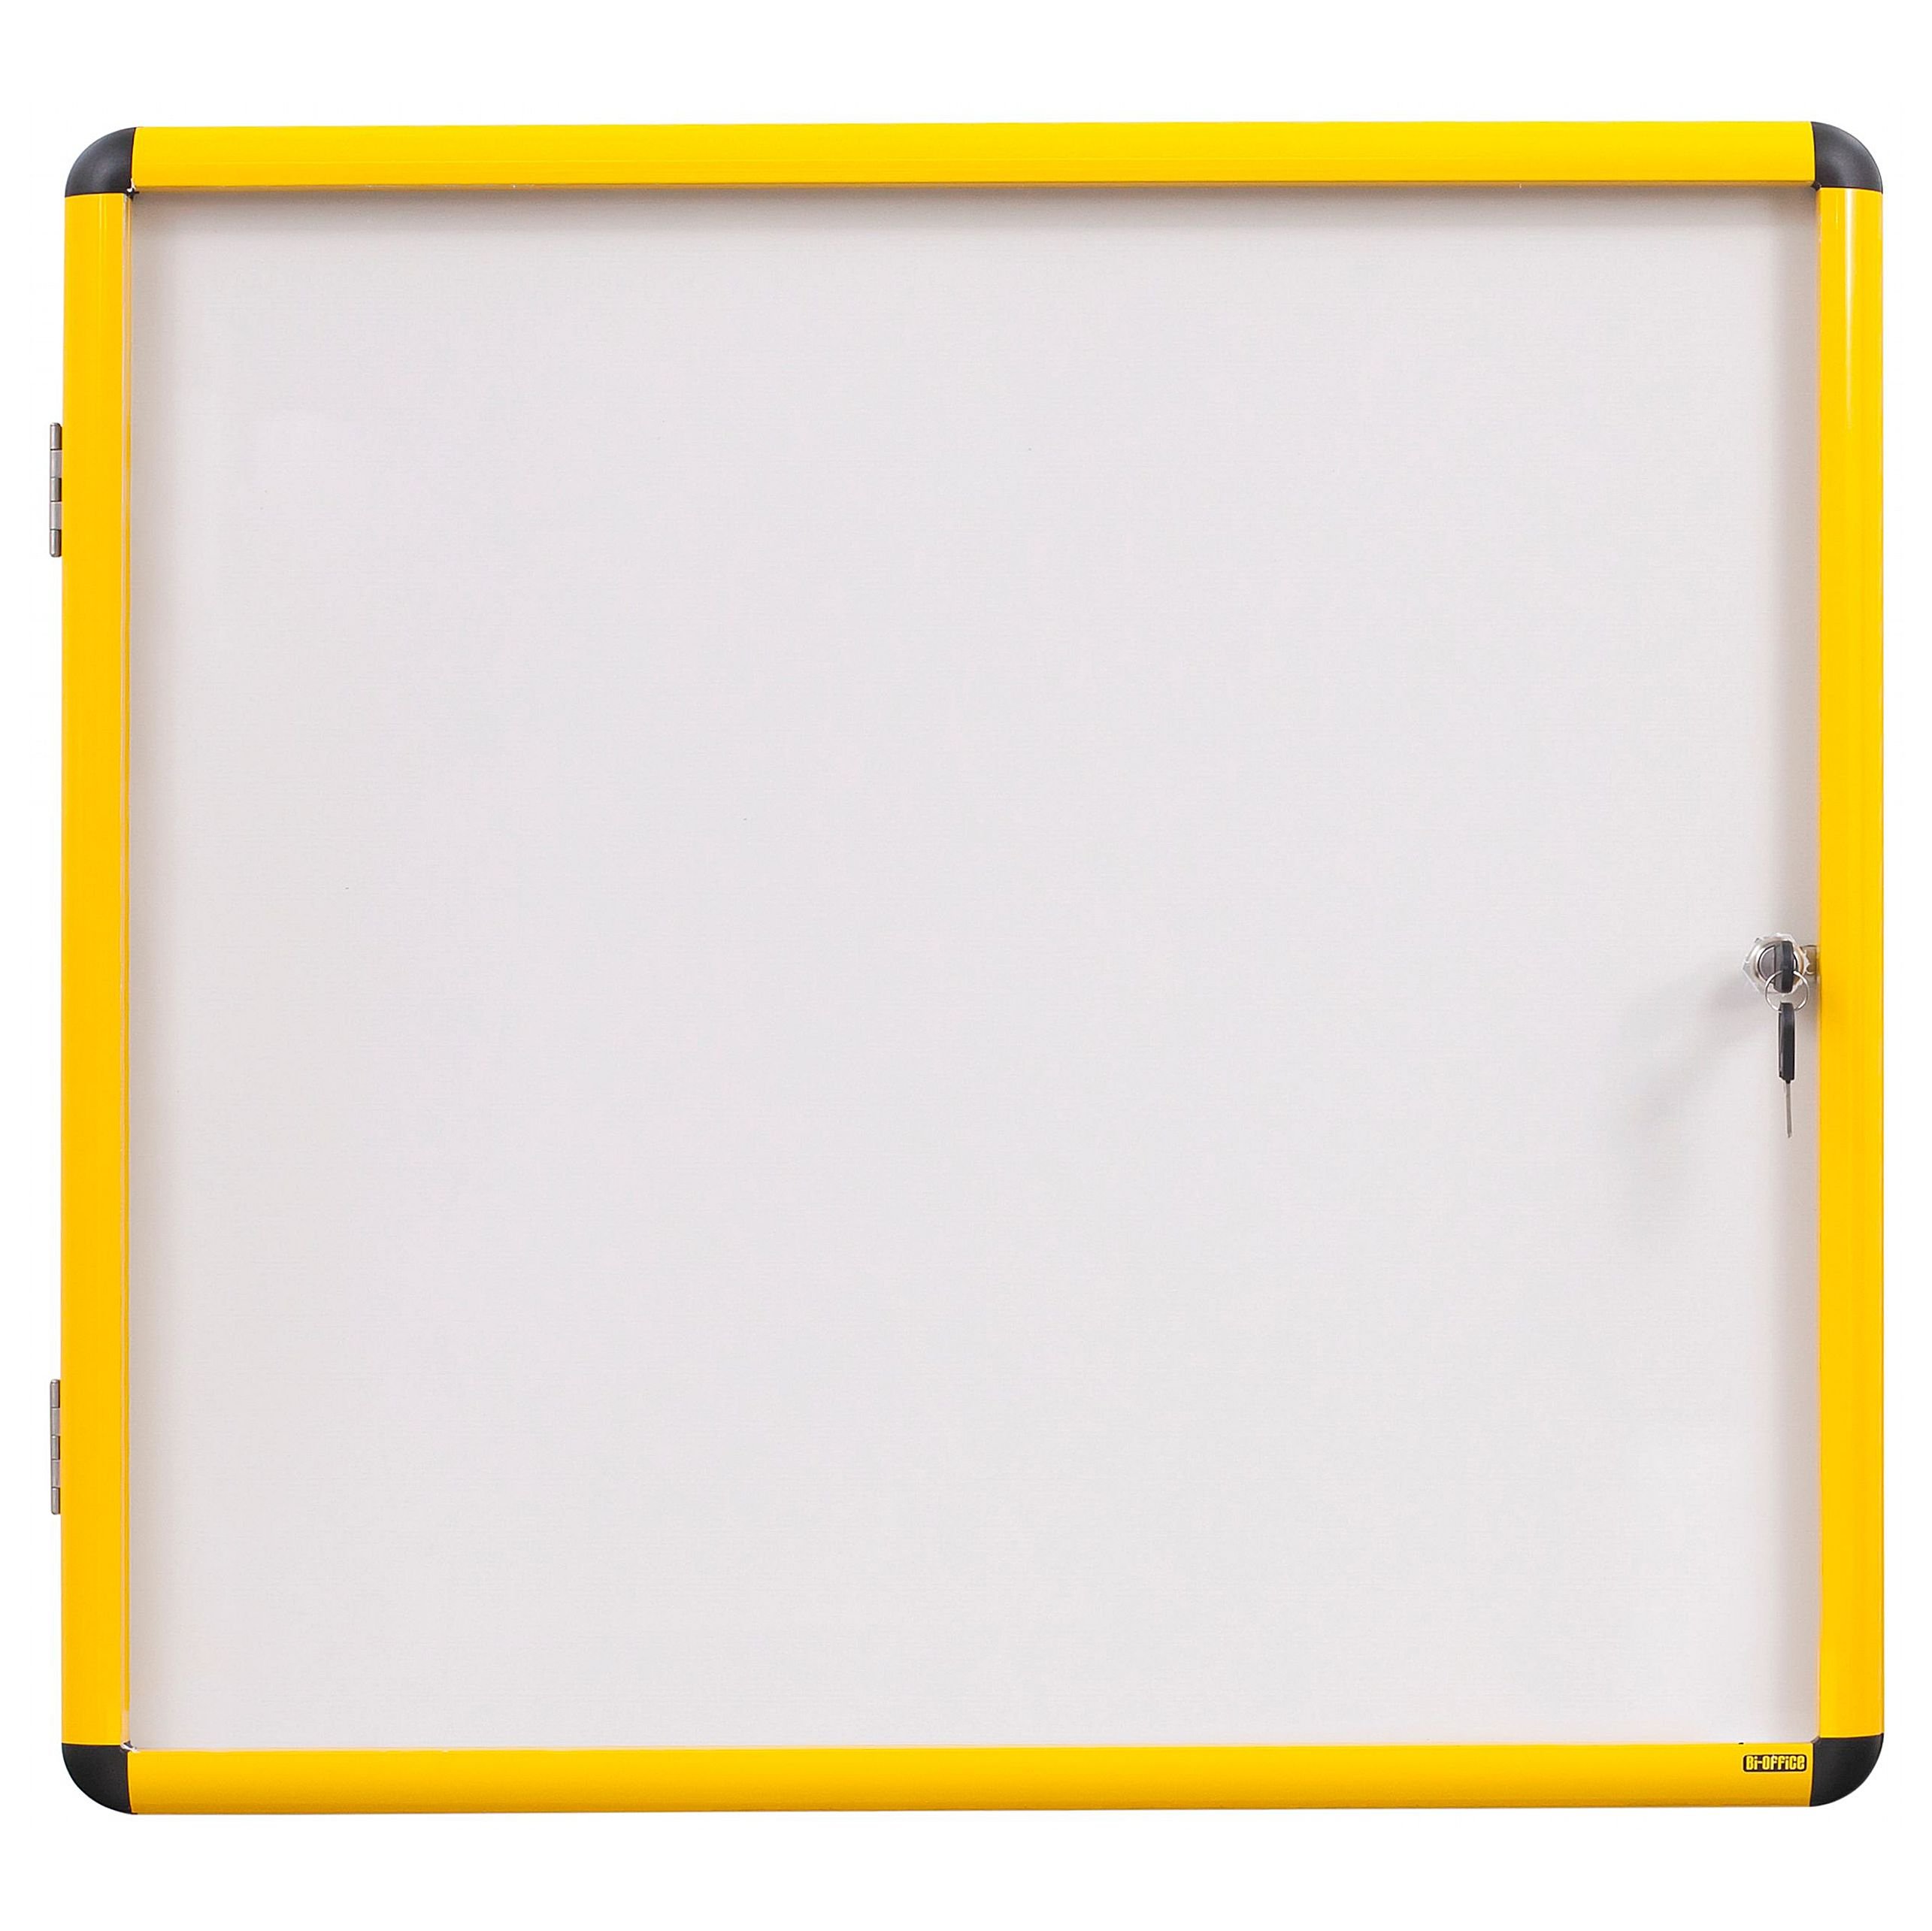 gebroken dans is genoeg Bi-Office Industrial Ultrabrite Tamperproof Magnetic Whiteboard |  Whiteboards